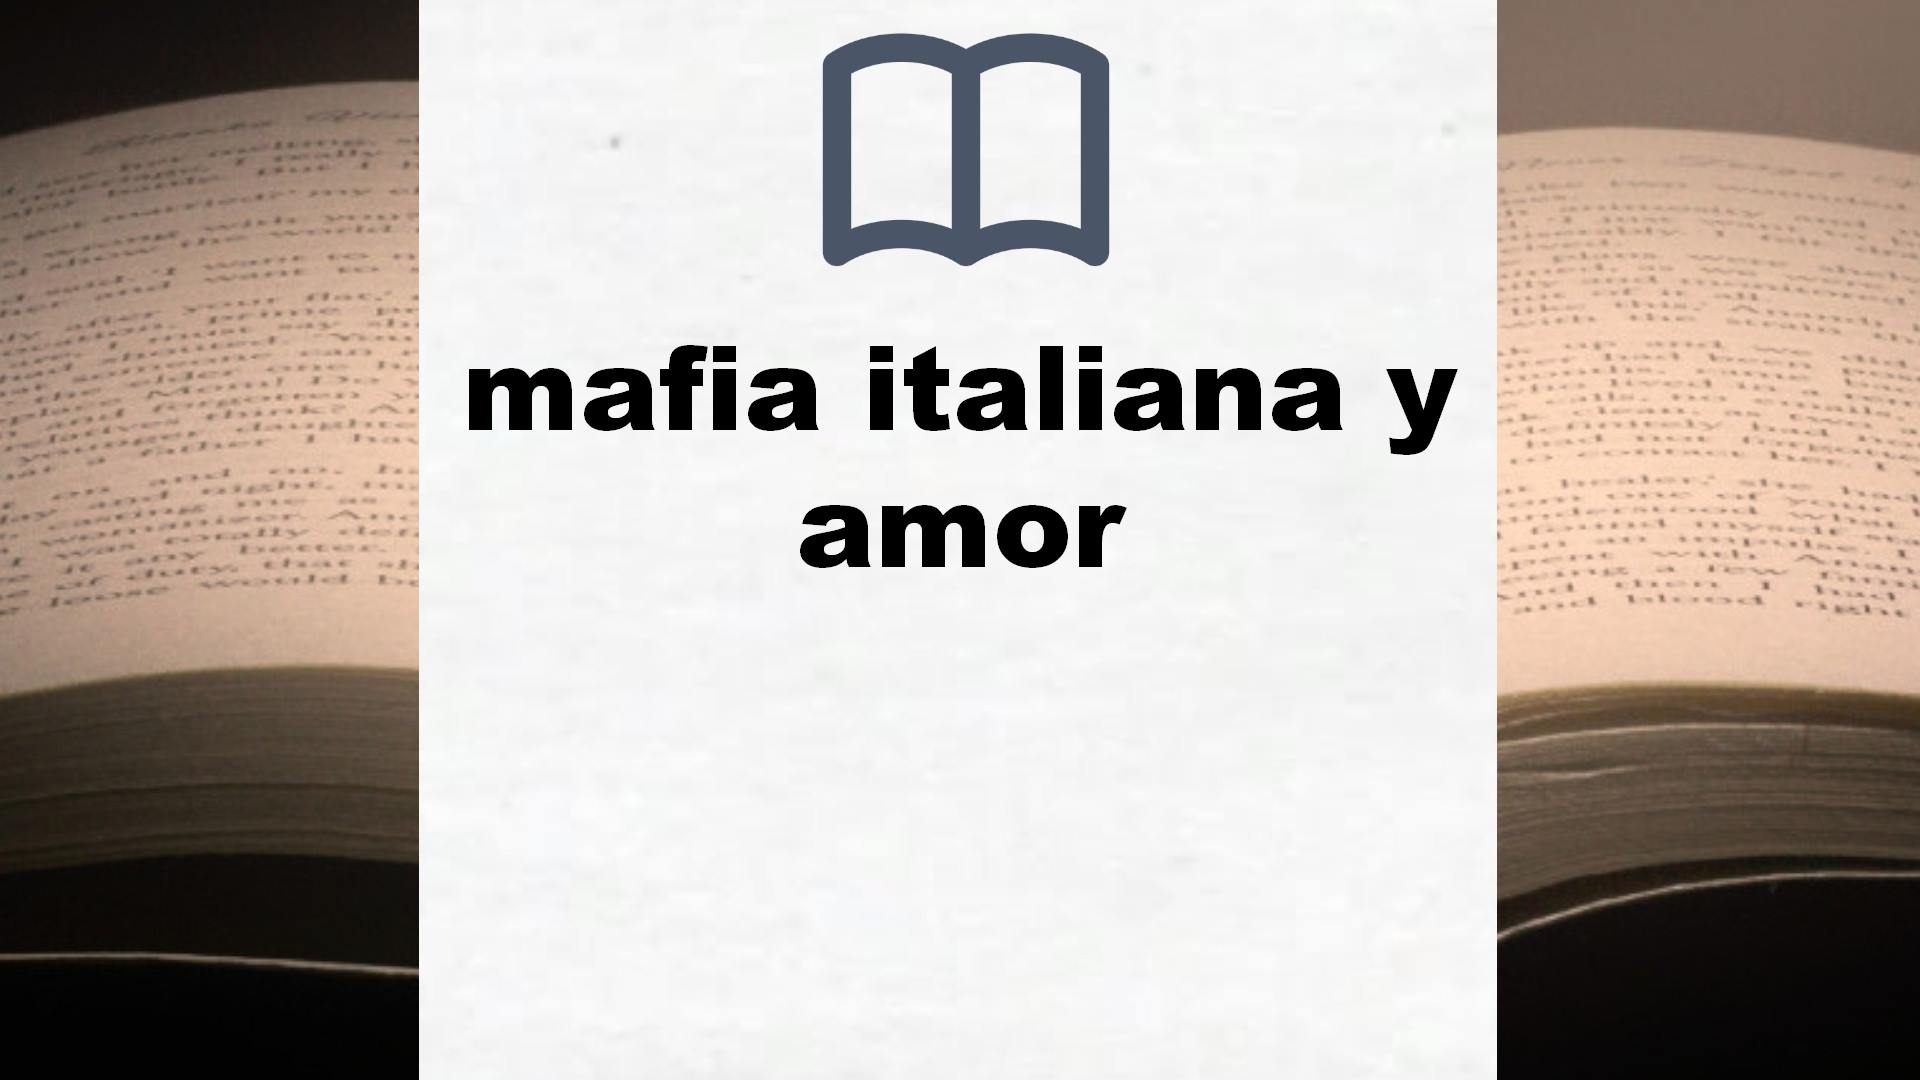 Libros sobre mafia italiana y amor